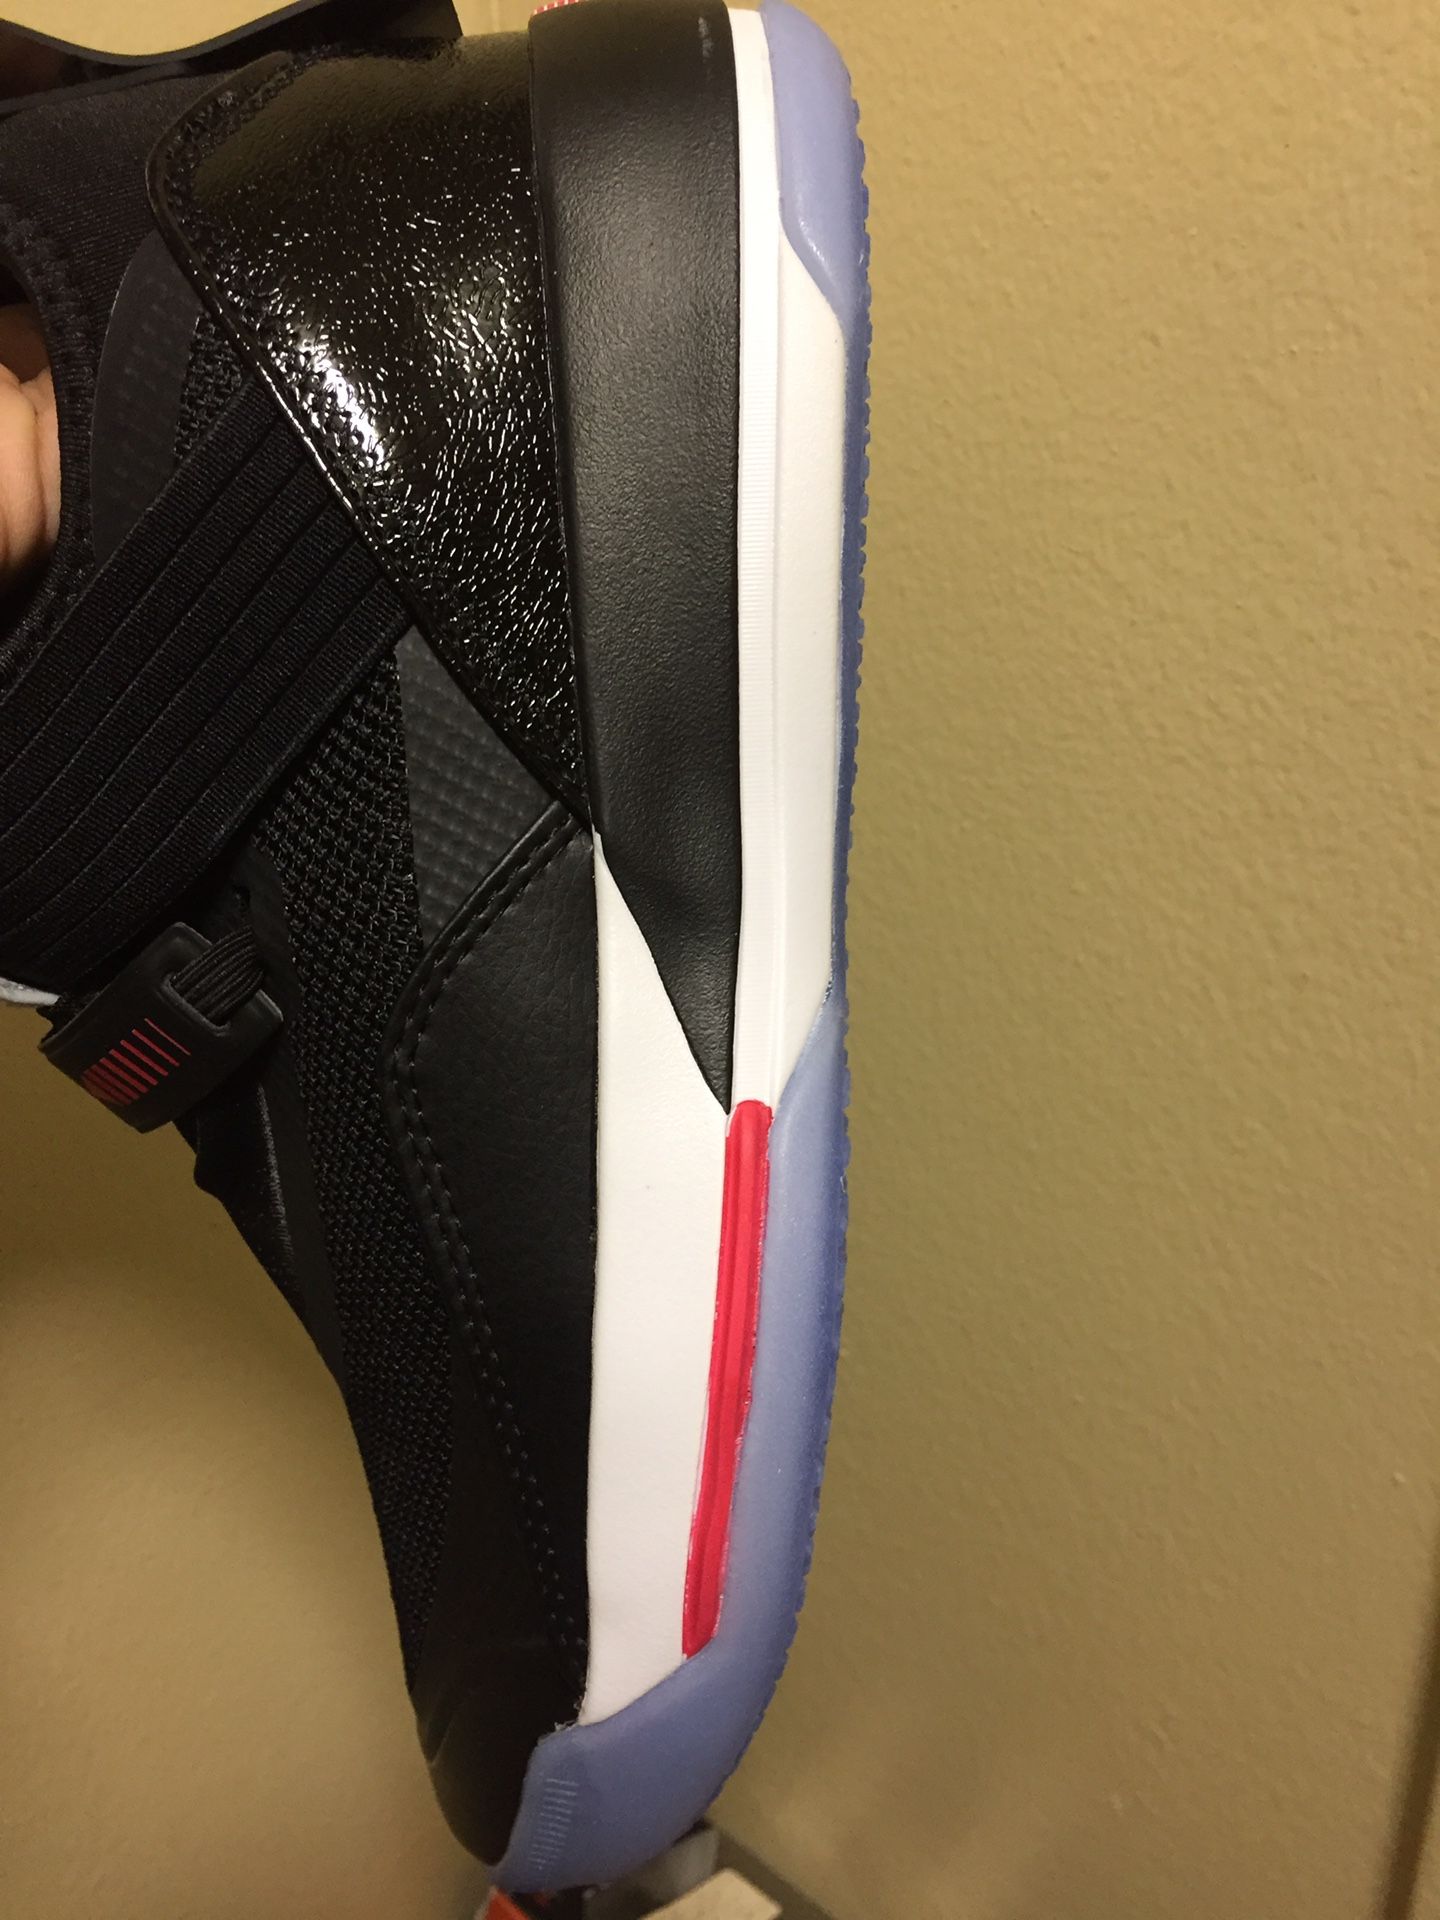 Nike Jordan shoe 10. 1:1